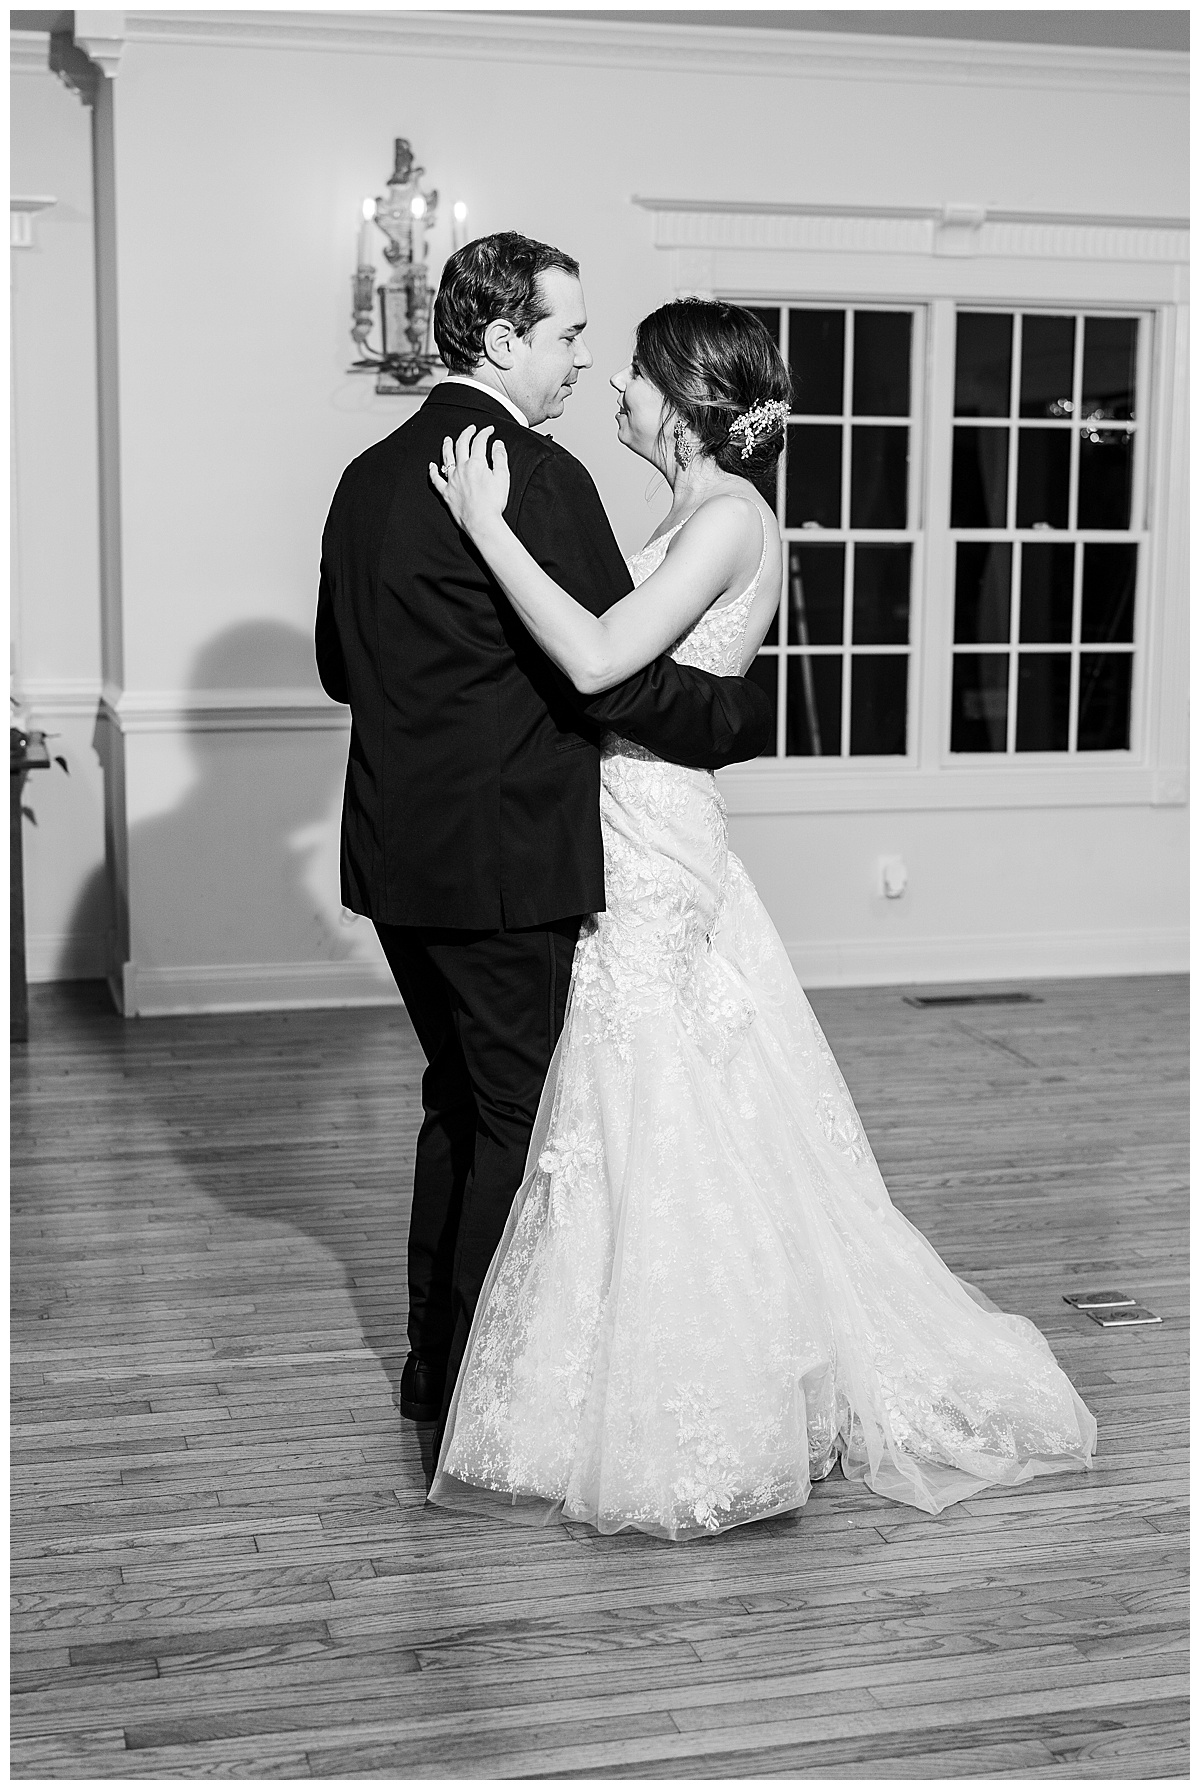 Stefanie Kamerman Photography - Jen and Matt - A Blush and Burgandy Themed Wedding - Manor at Airmont, Round Hill, Virginia_0082.jpg